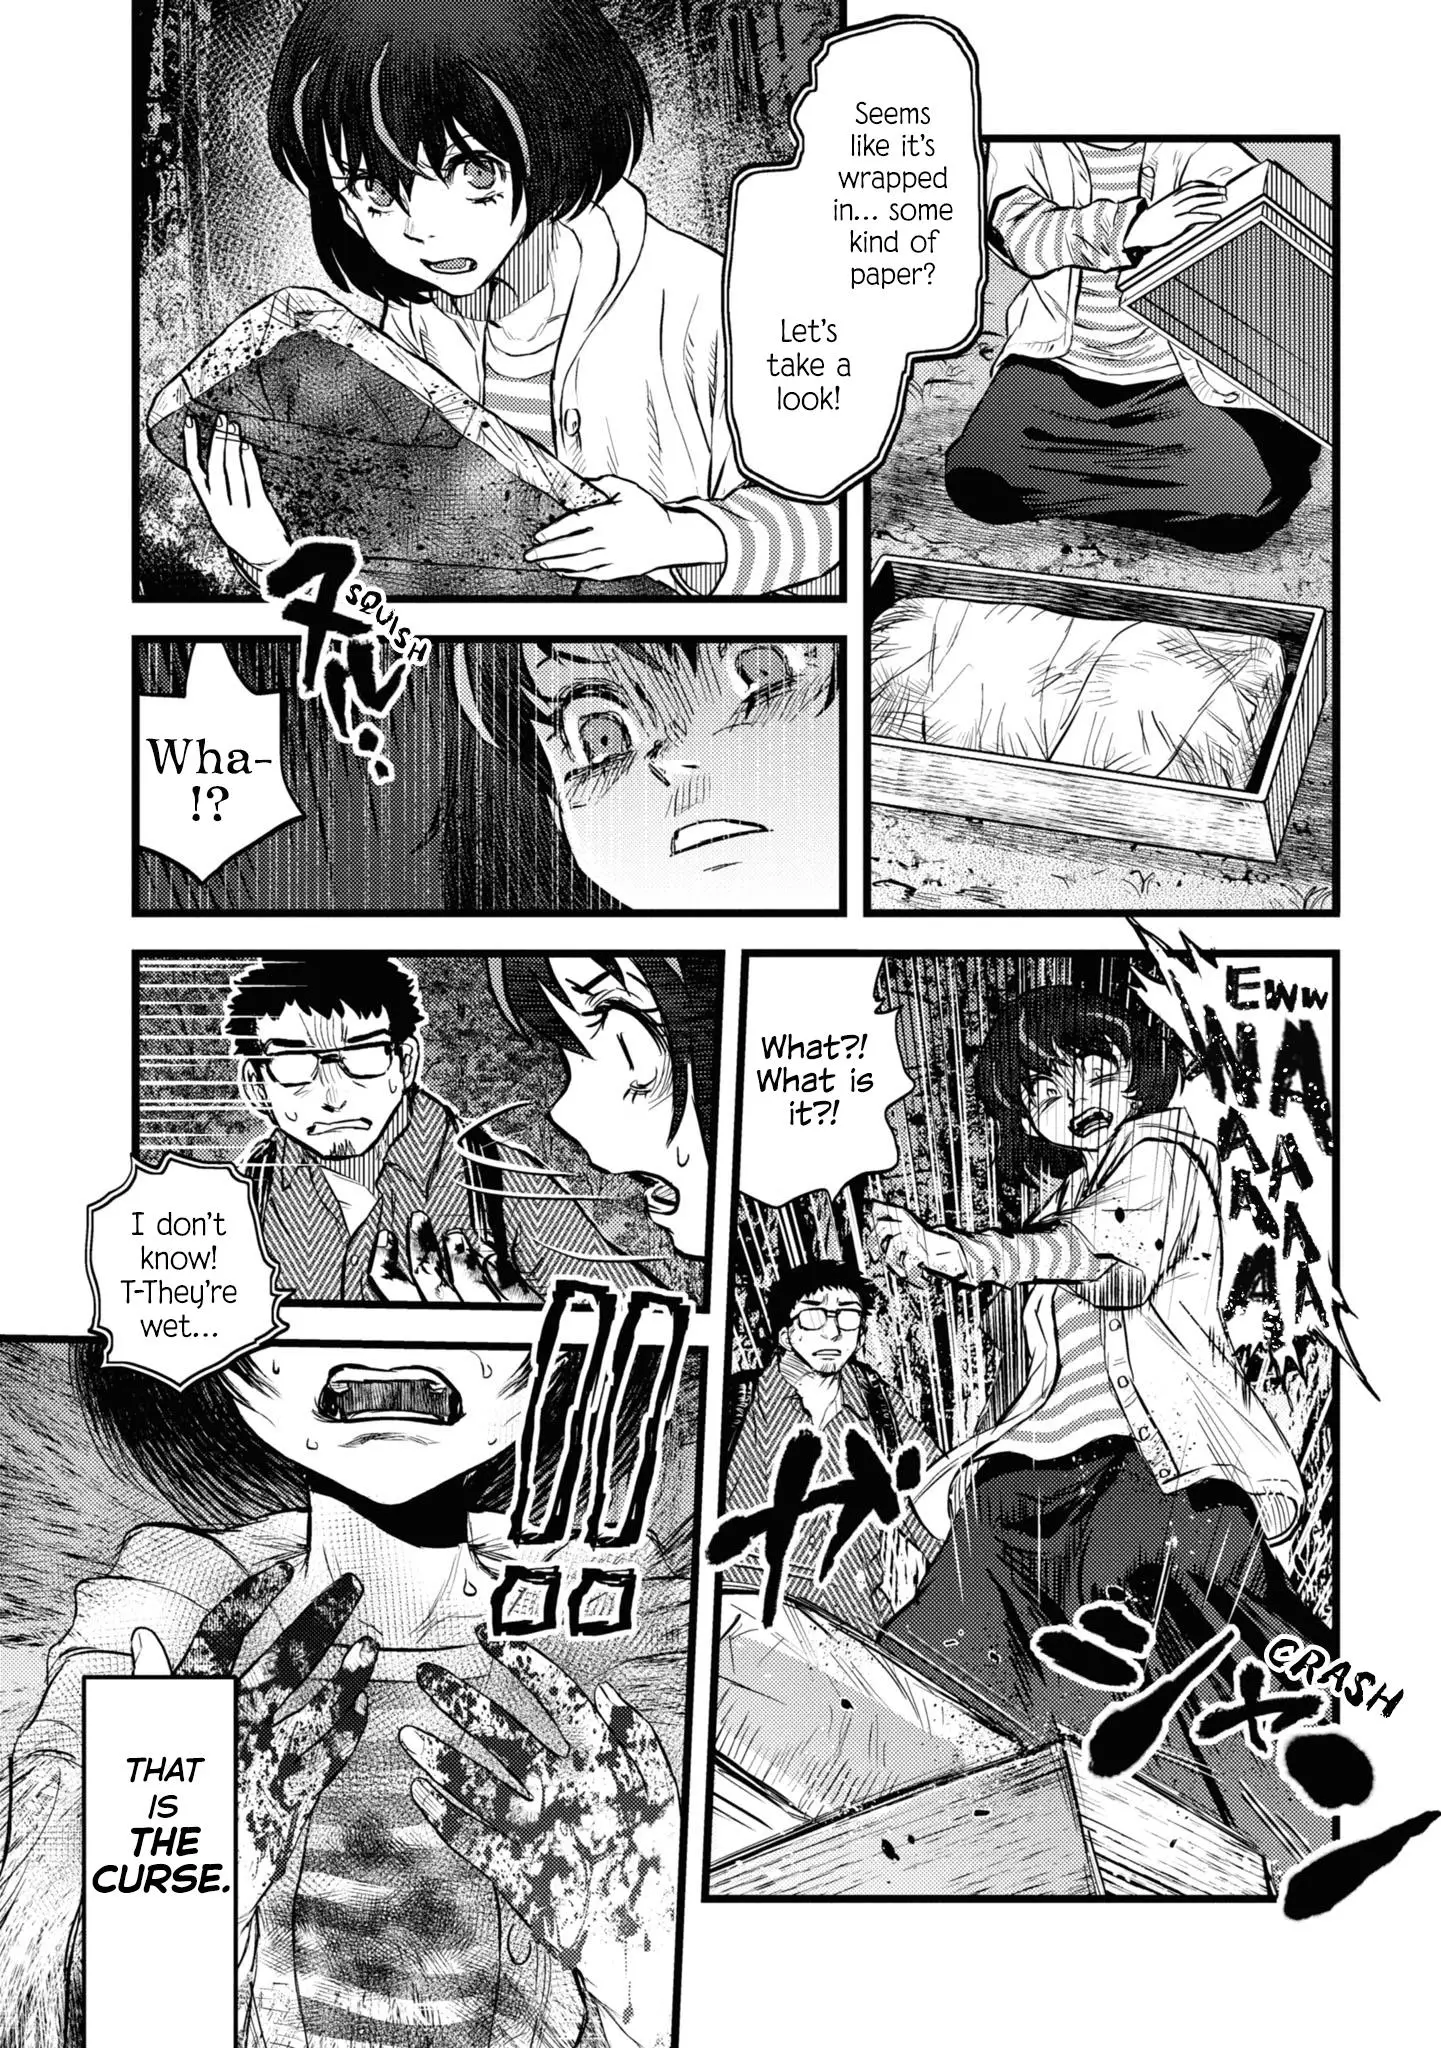 Reiwa No Dara-San - 14 page 17-7655d454